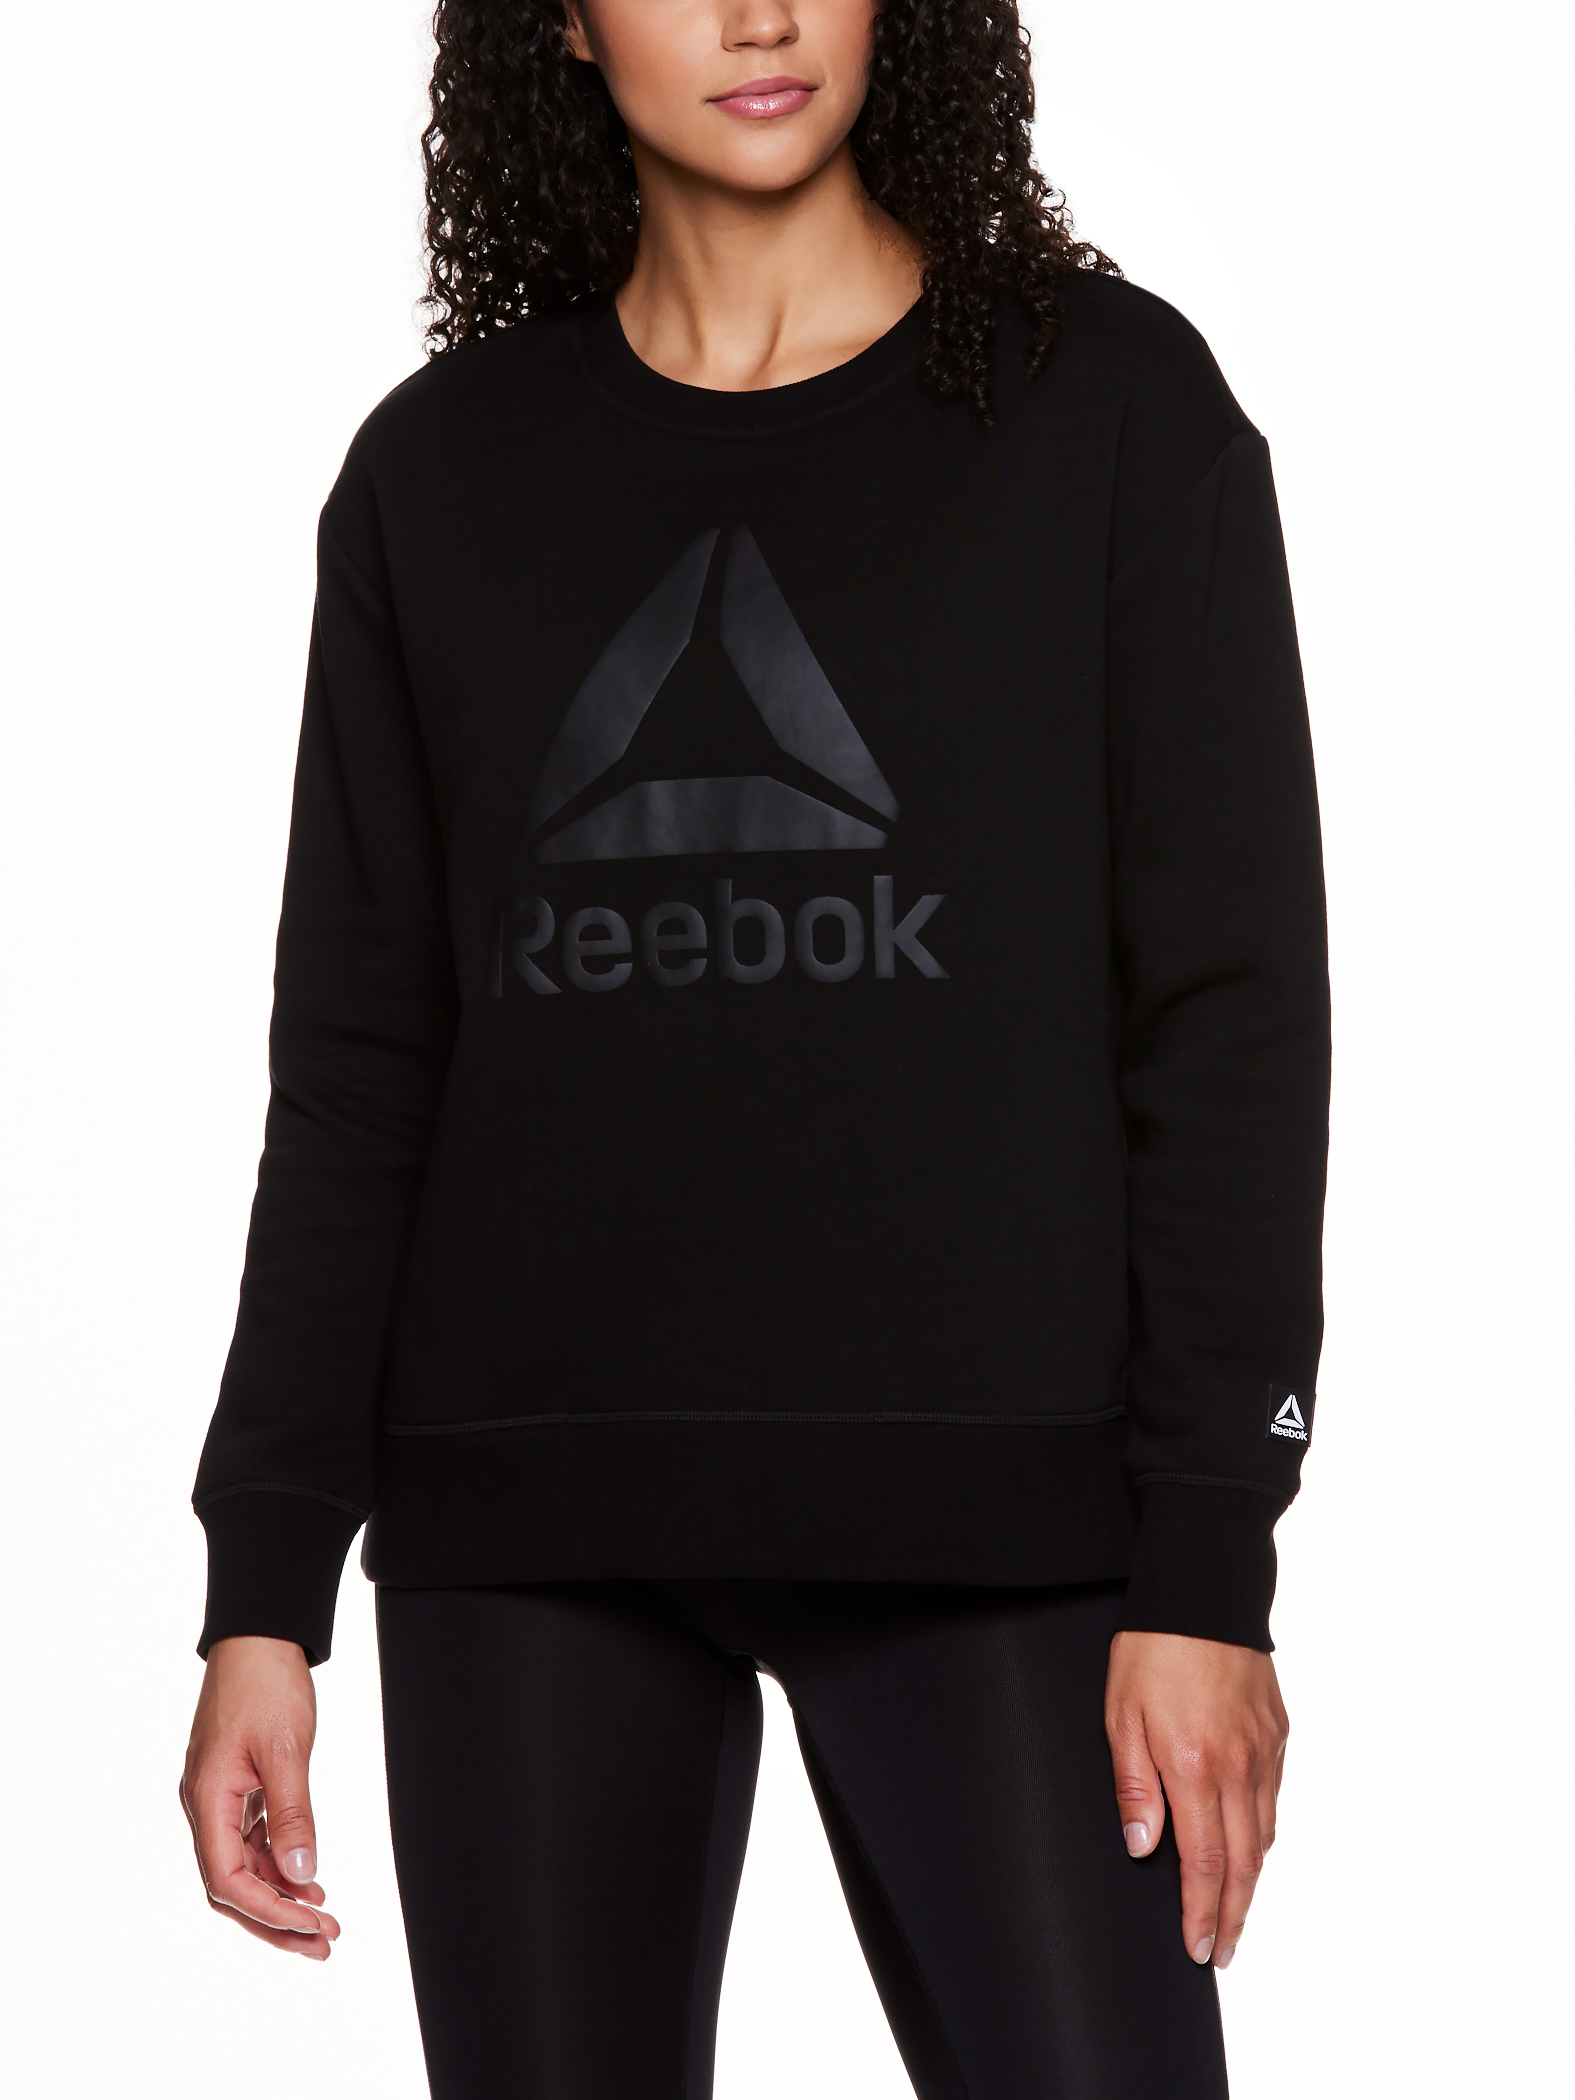 Reebok Women's Supersoft Gravity Crewneck Sweatshirt with Side Pockets - image 1 of 7